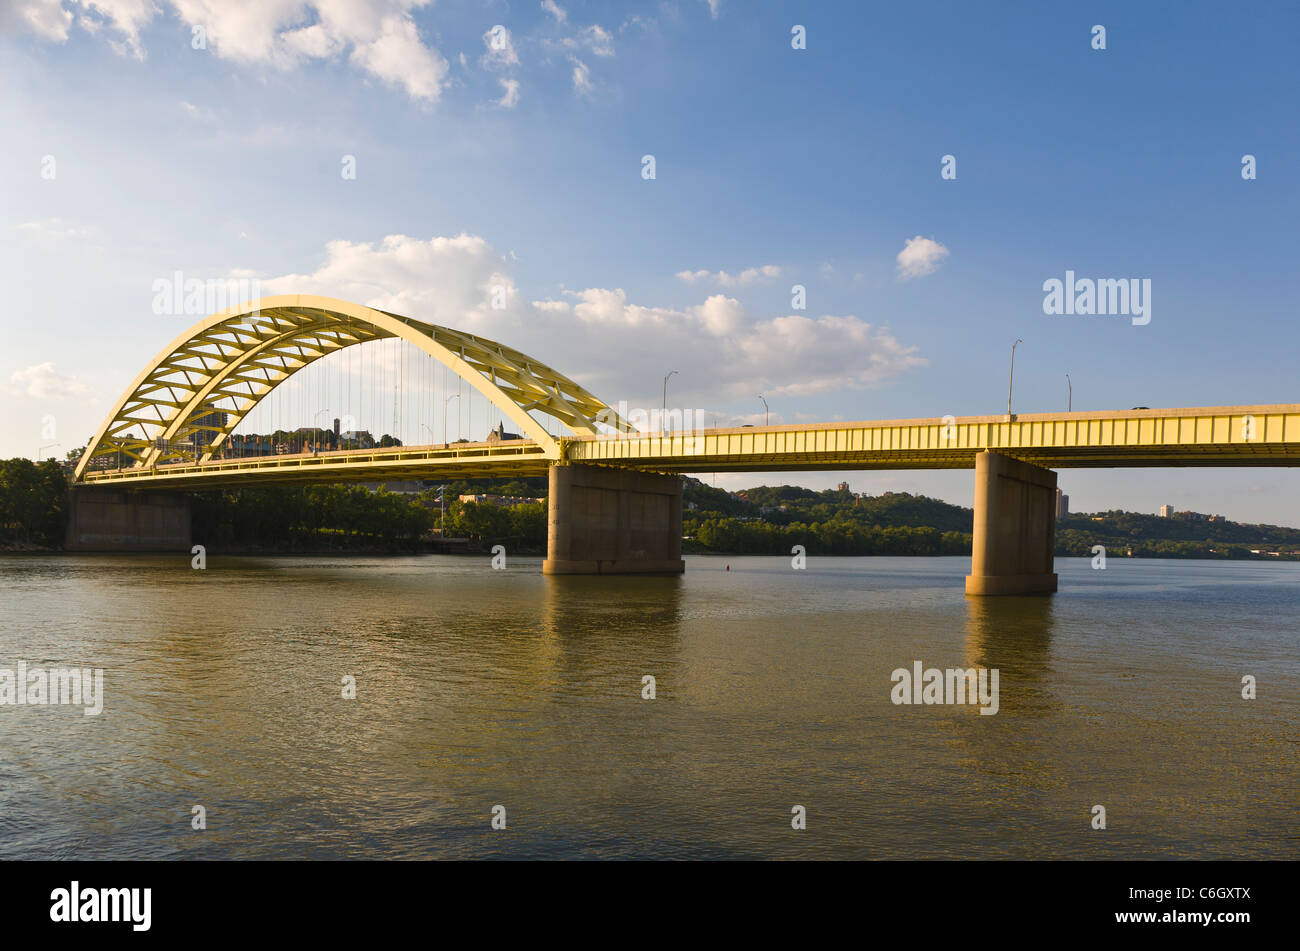 Daniel Carter Bart Route 471 Brücke über den Ohio River in Cincinnati Ohio auch bekannt als der Big-Mac-Bridge Stockfoto